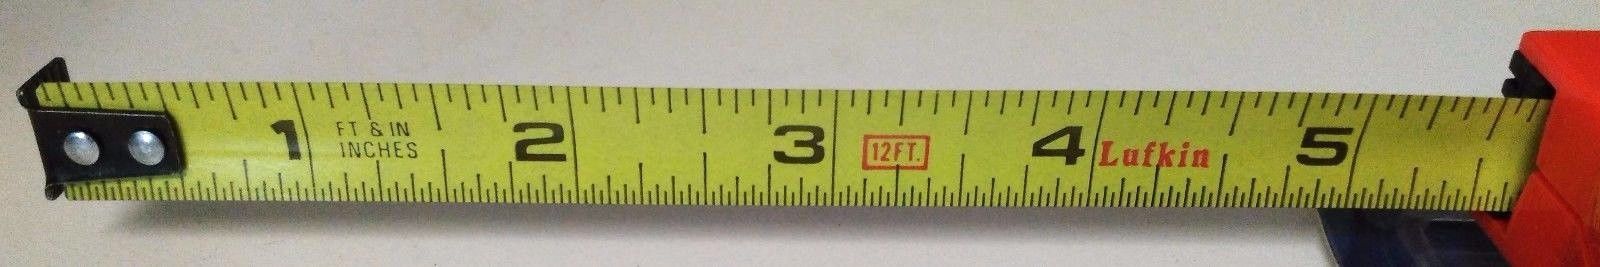 Lufkin HV1012 1/2" x 12' Hi-Viz Orange Series 1000 Tape Measure